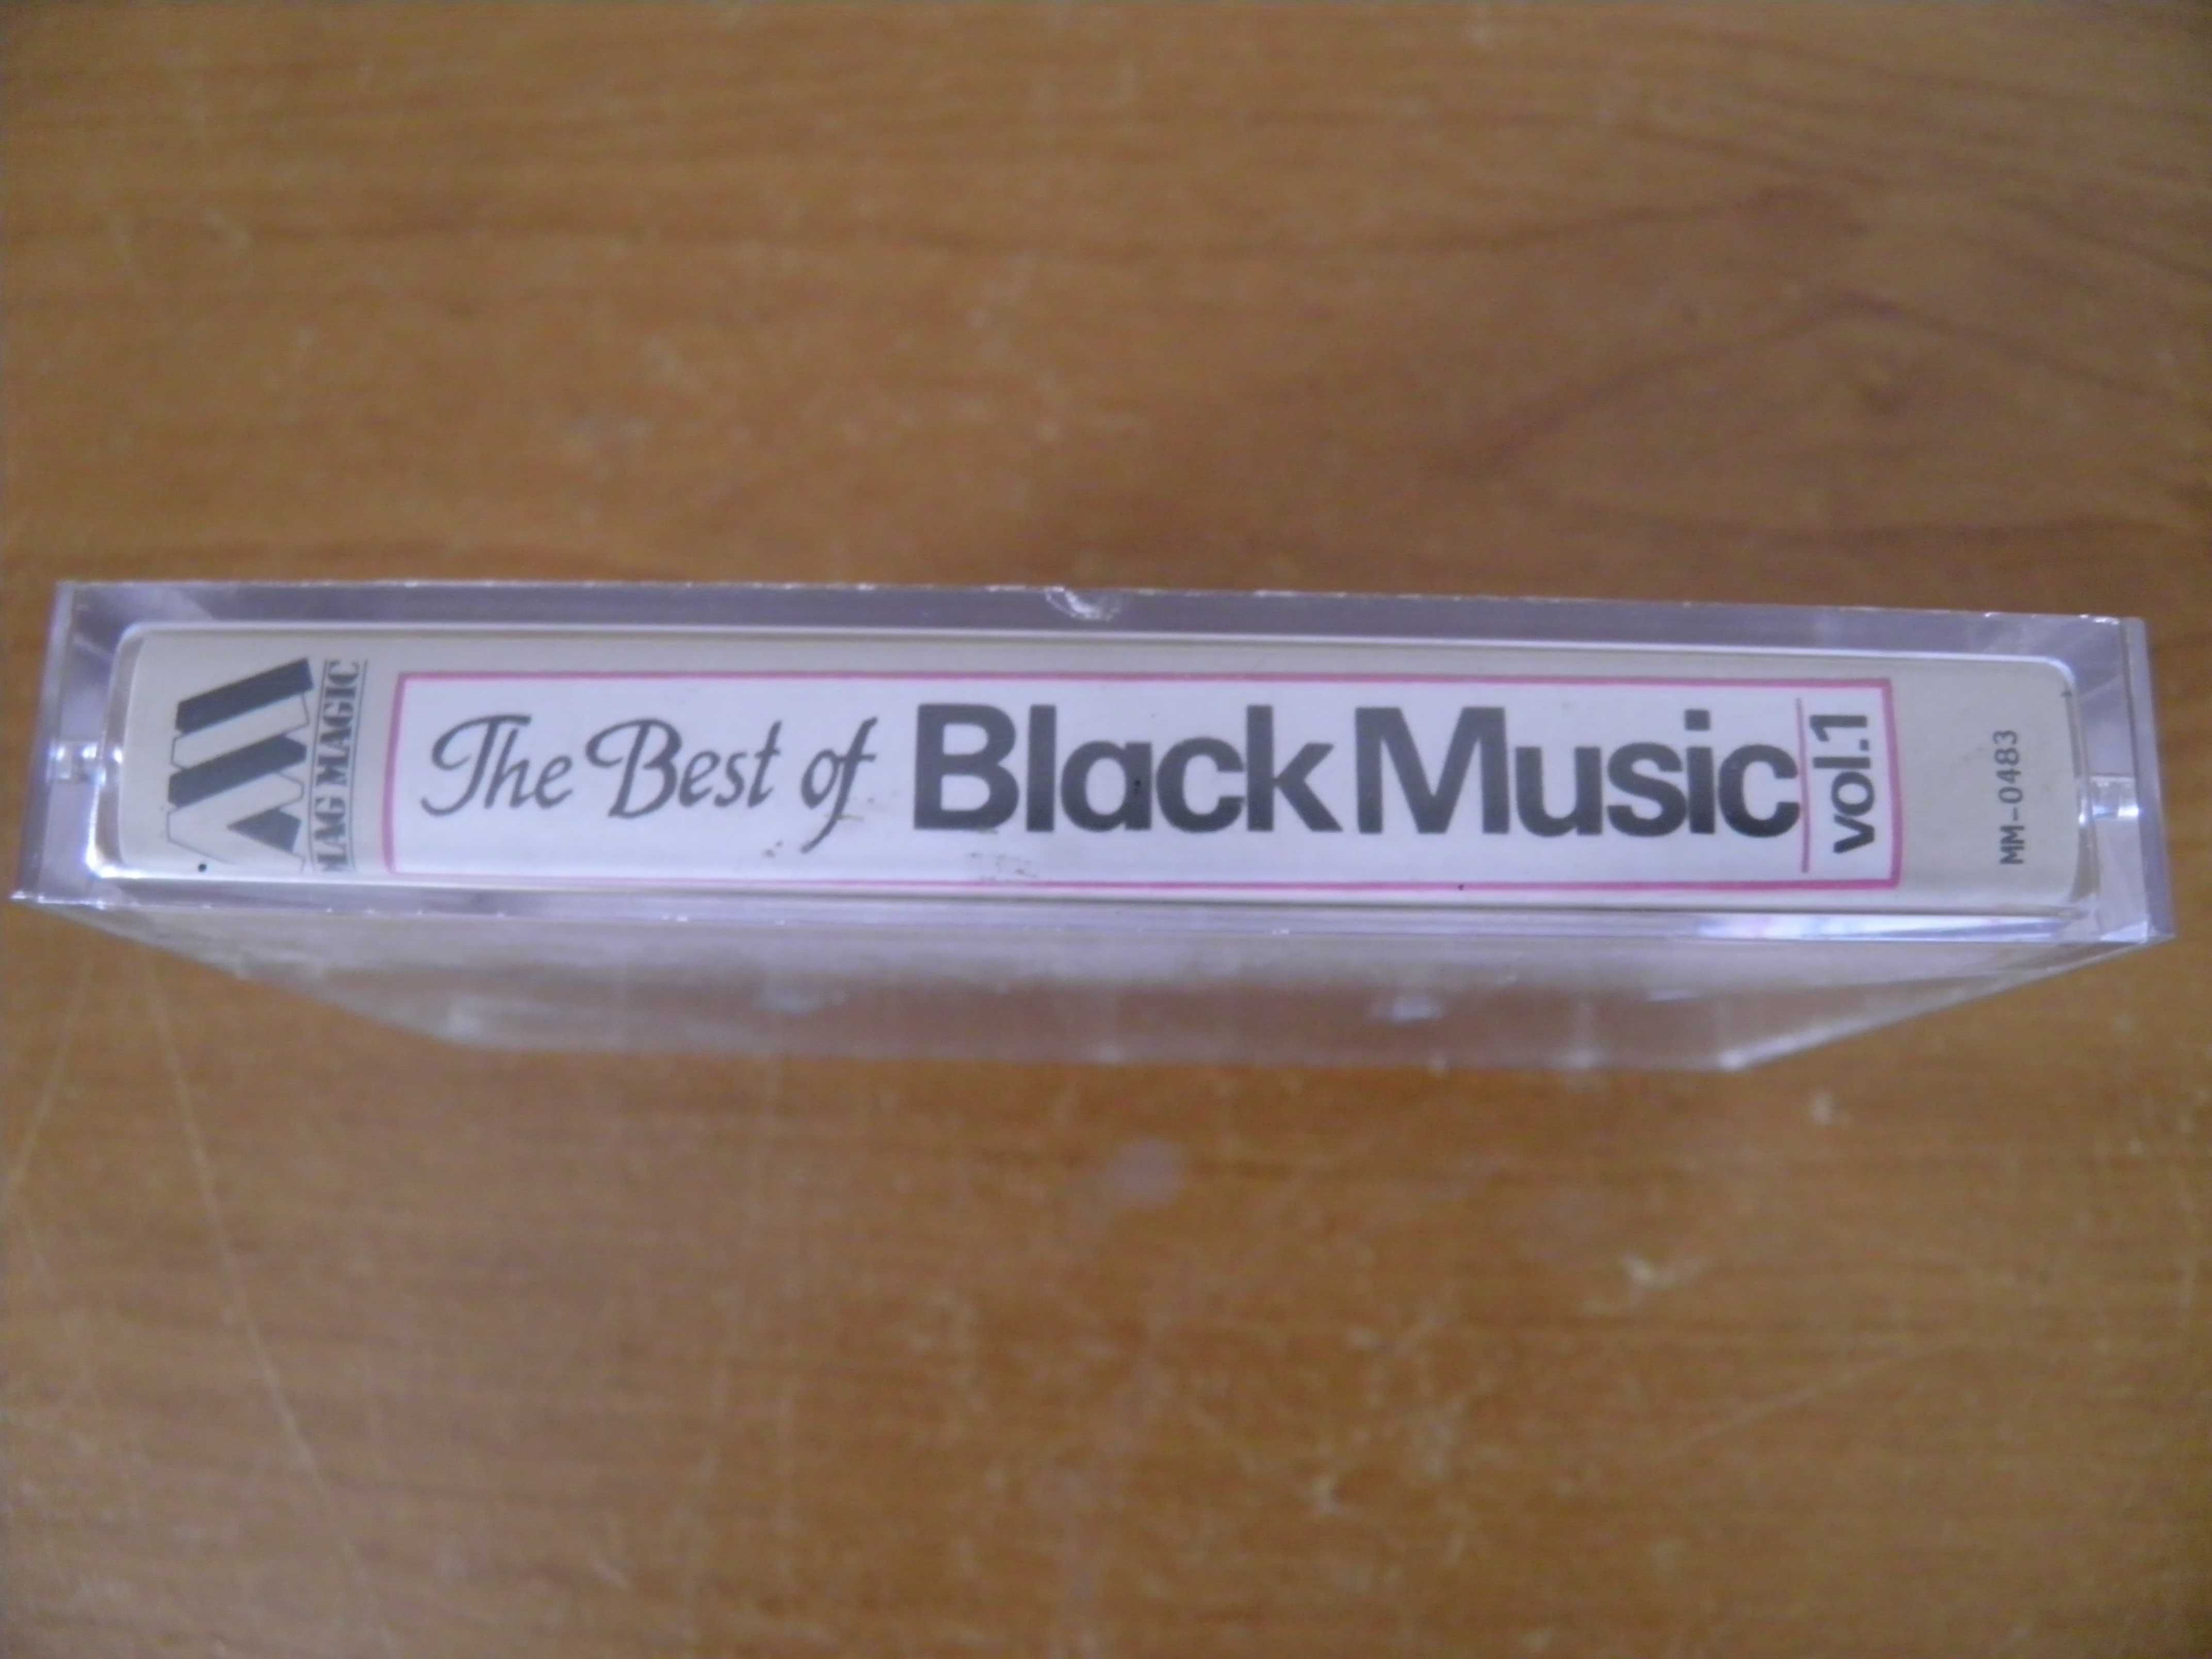 Black Music vol.1 The best of kaseta